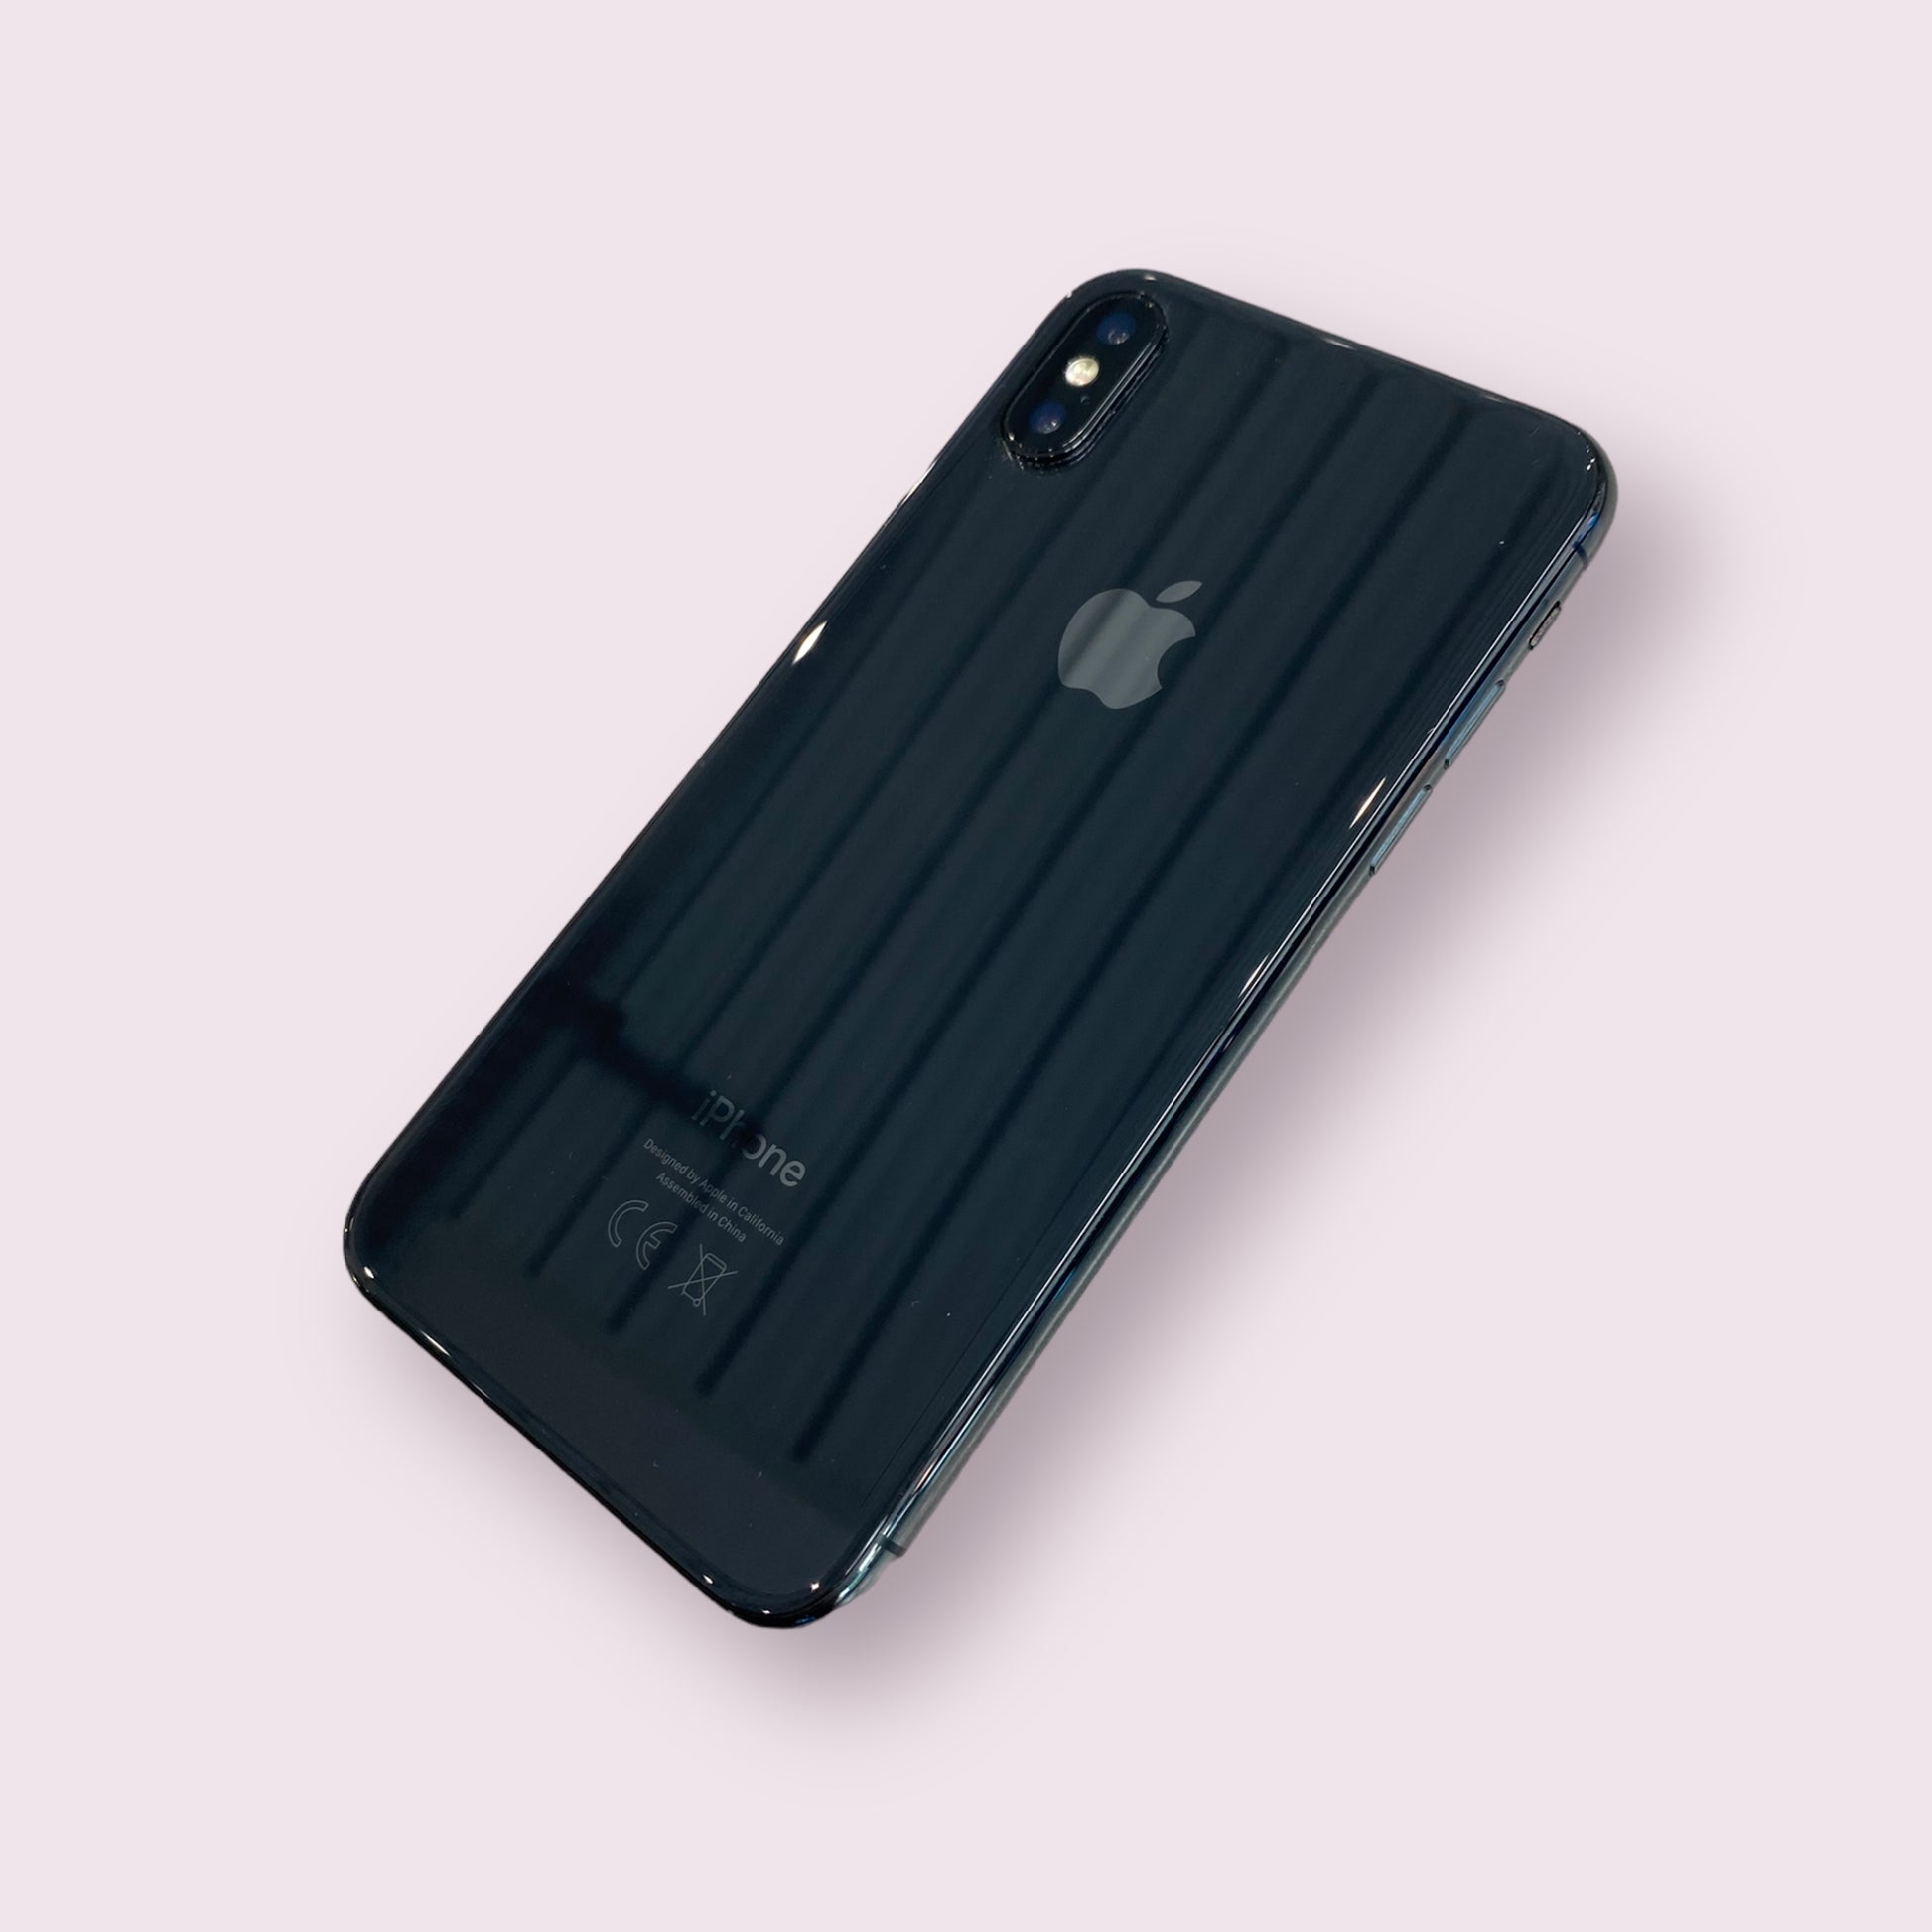 iPhone X 64GB - Space Gray - Unlocked